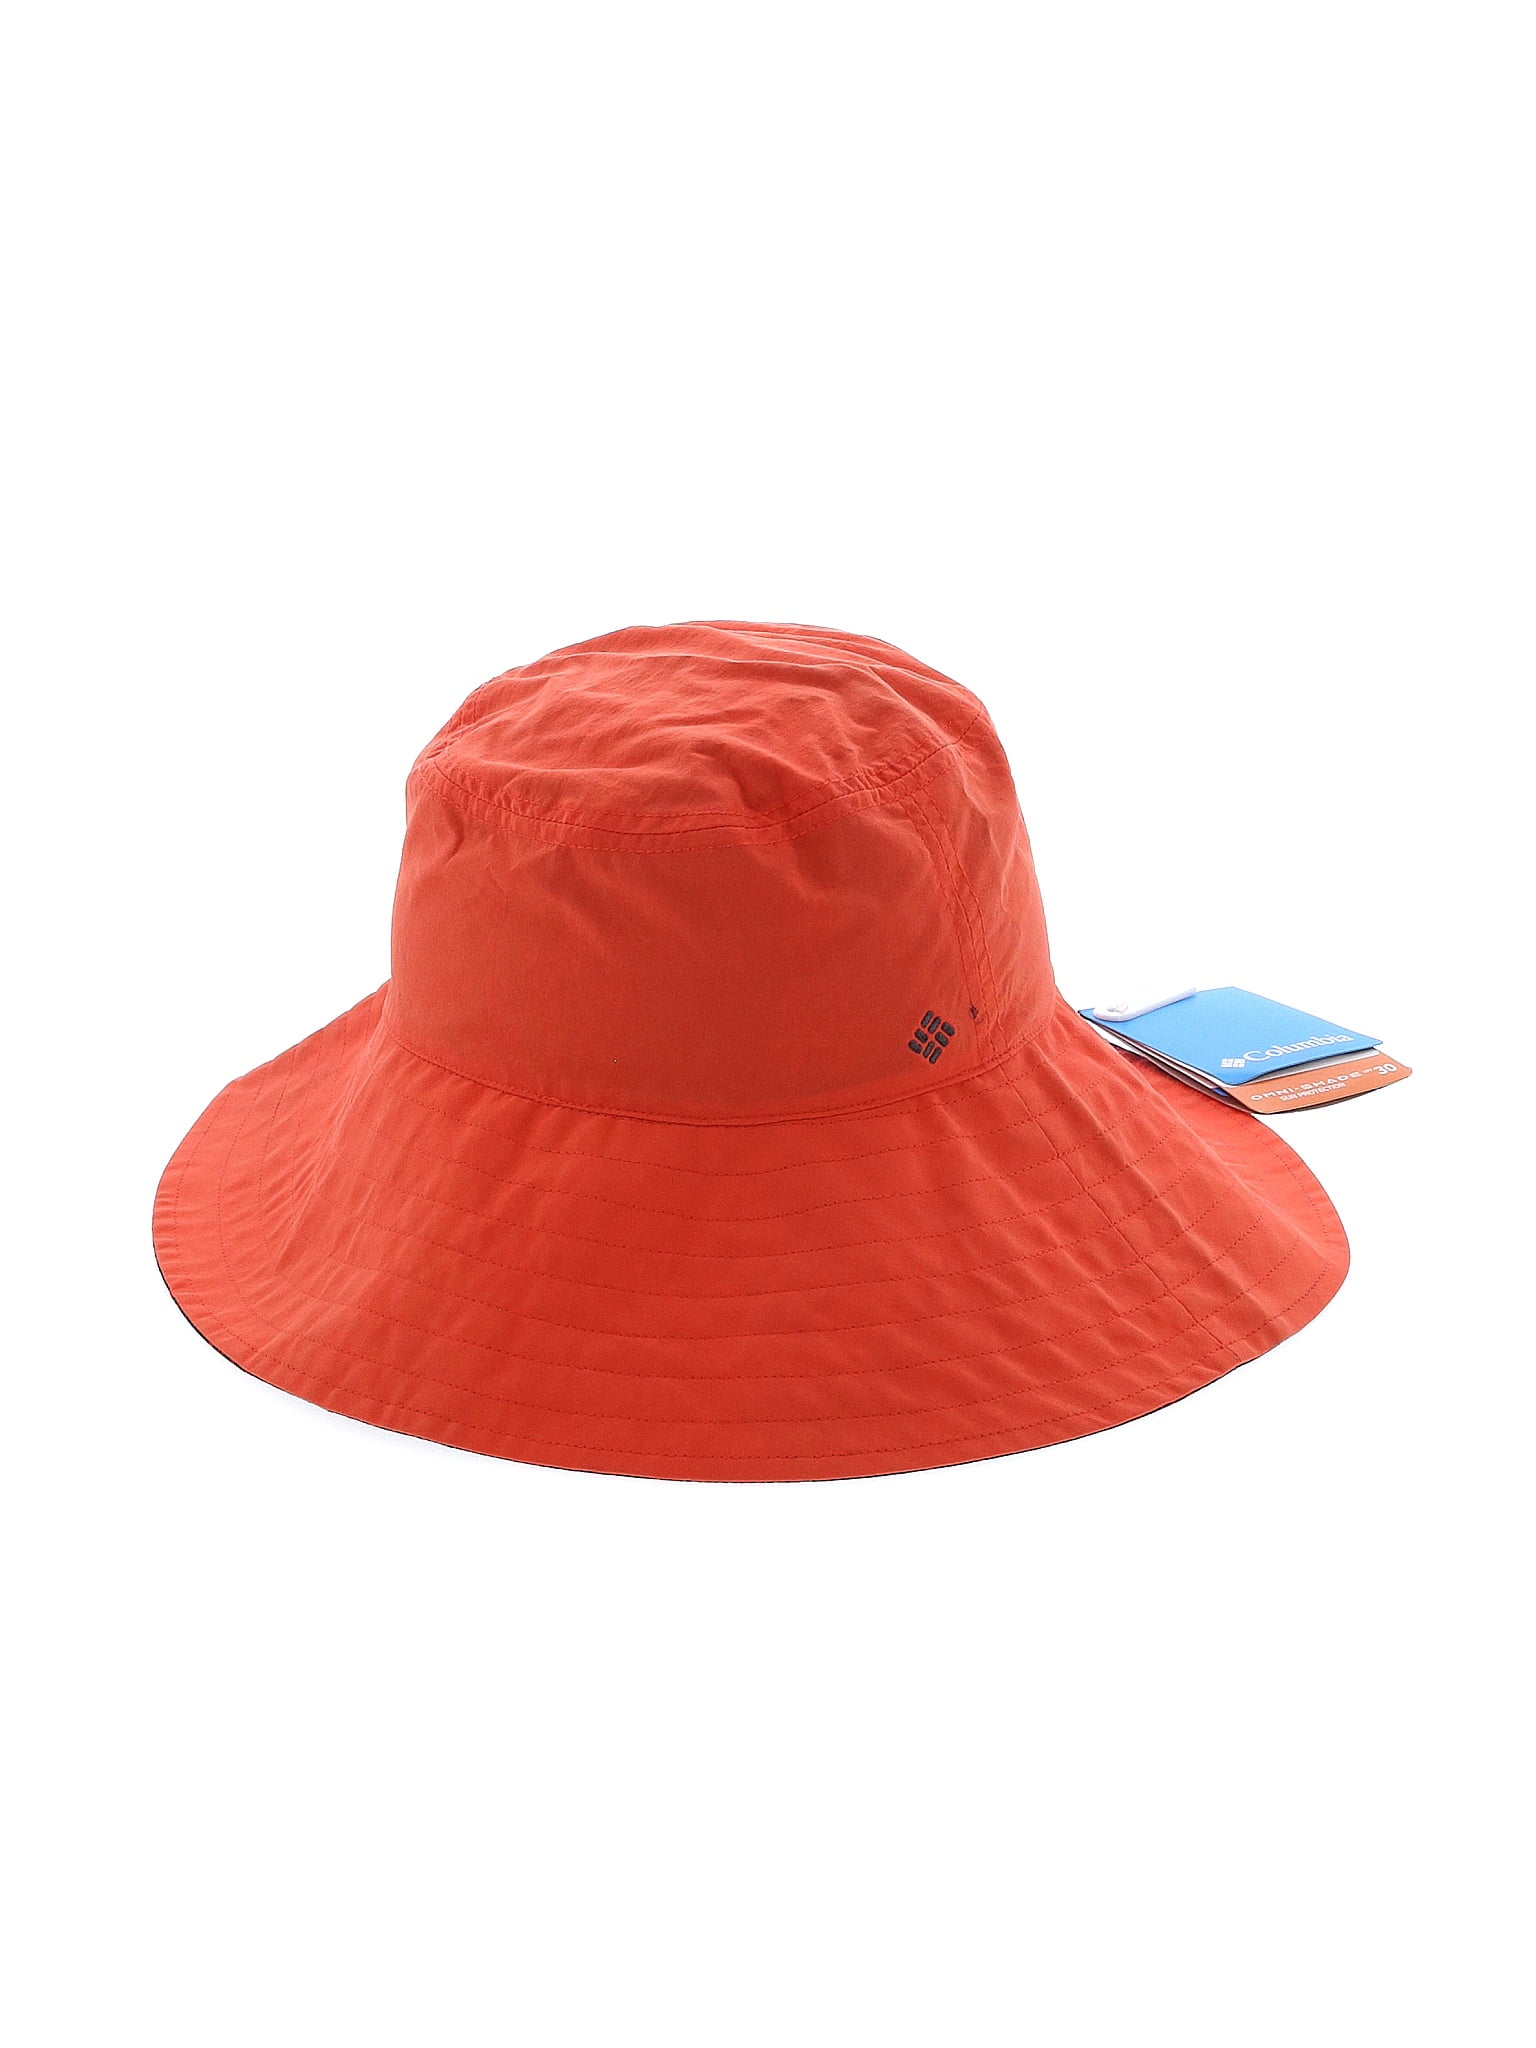 Columbia 100% Nylon Orange Sun Hat One Size - 46% off